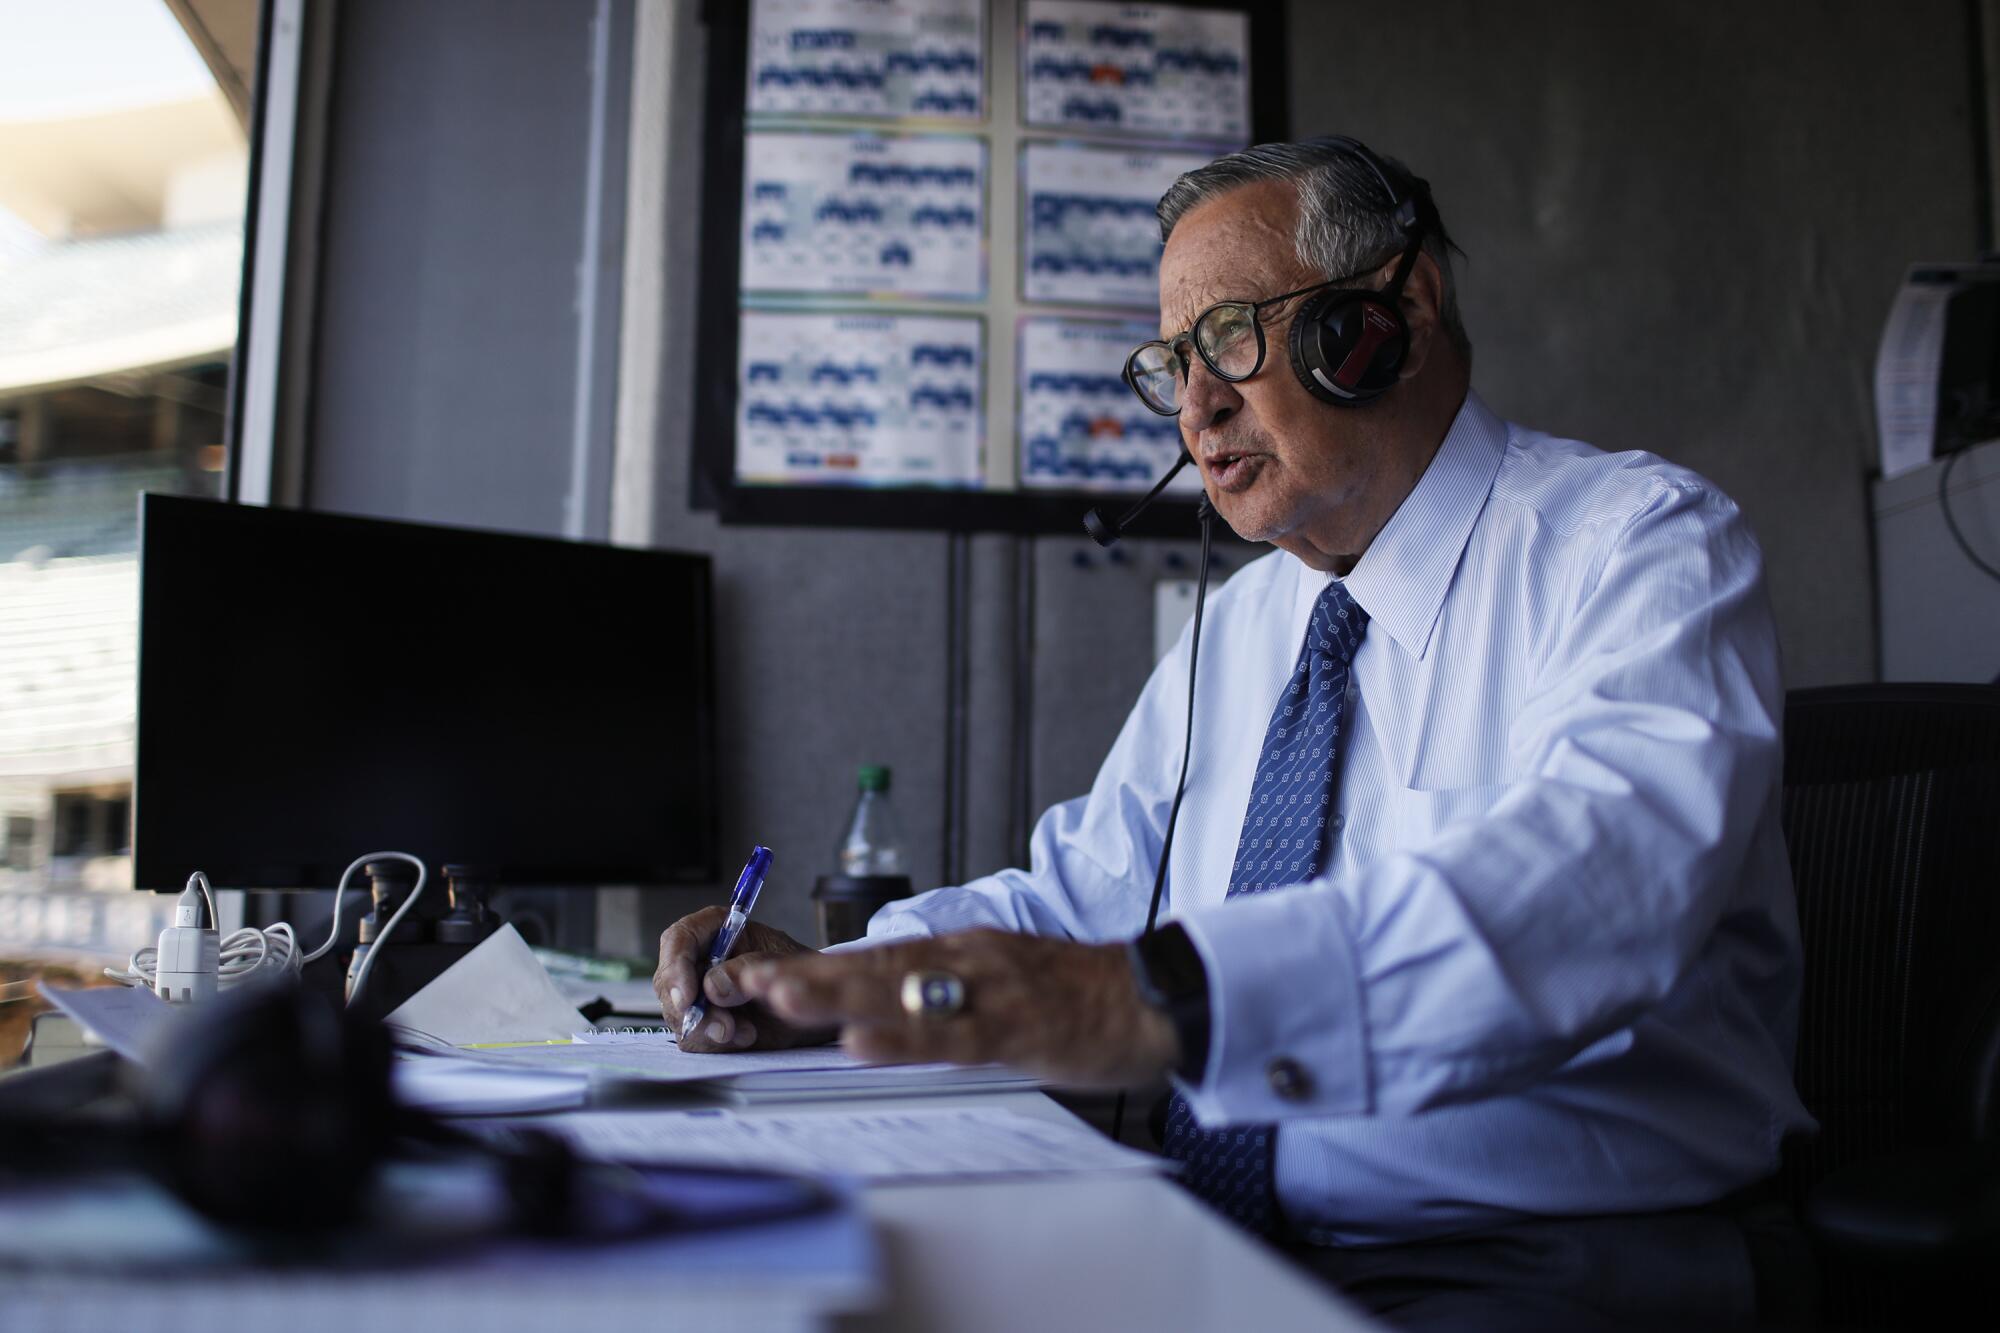 Jaime Jarrín, the legendary Latino voice of the Dodgers, retires